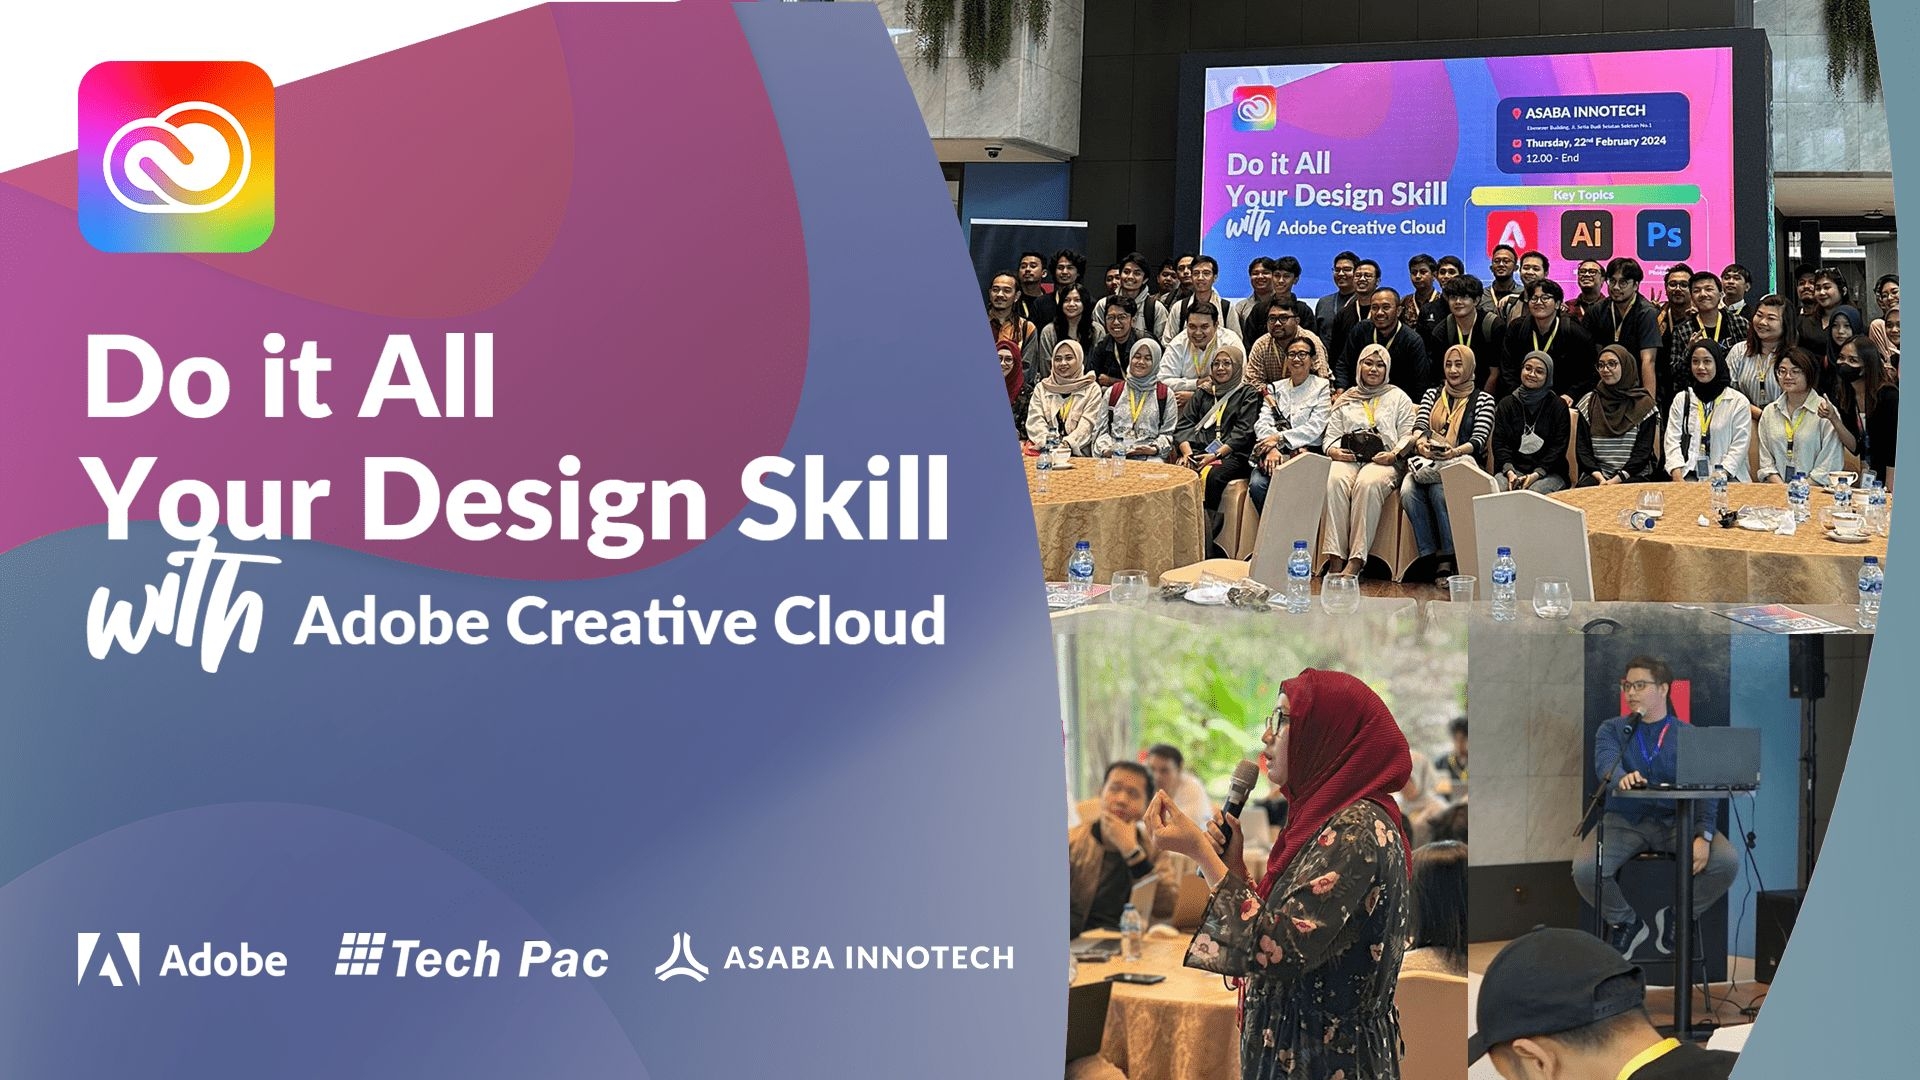 ASABA INNTOECH Dukung Kreativitas Di Era Digital Melalui Seminar Bersama Adobe Creative Cloud